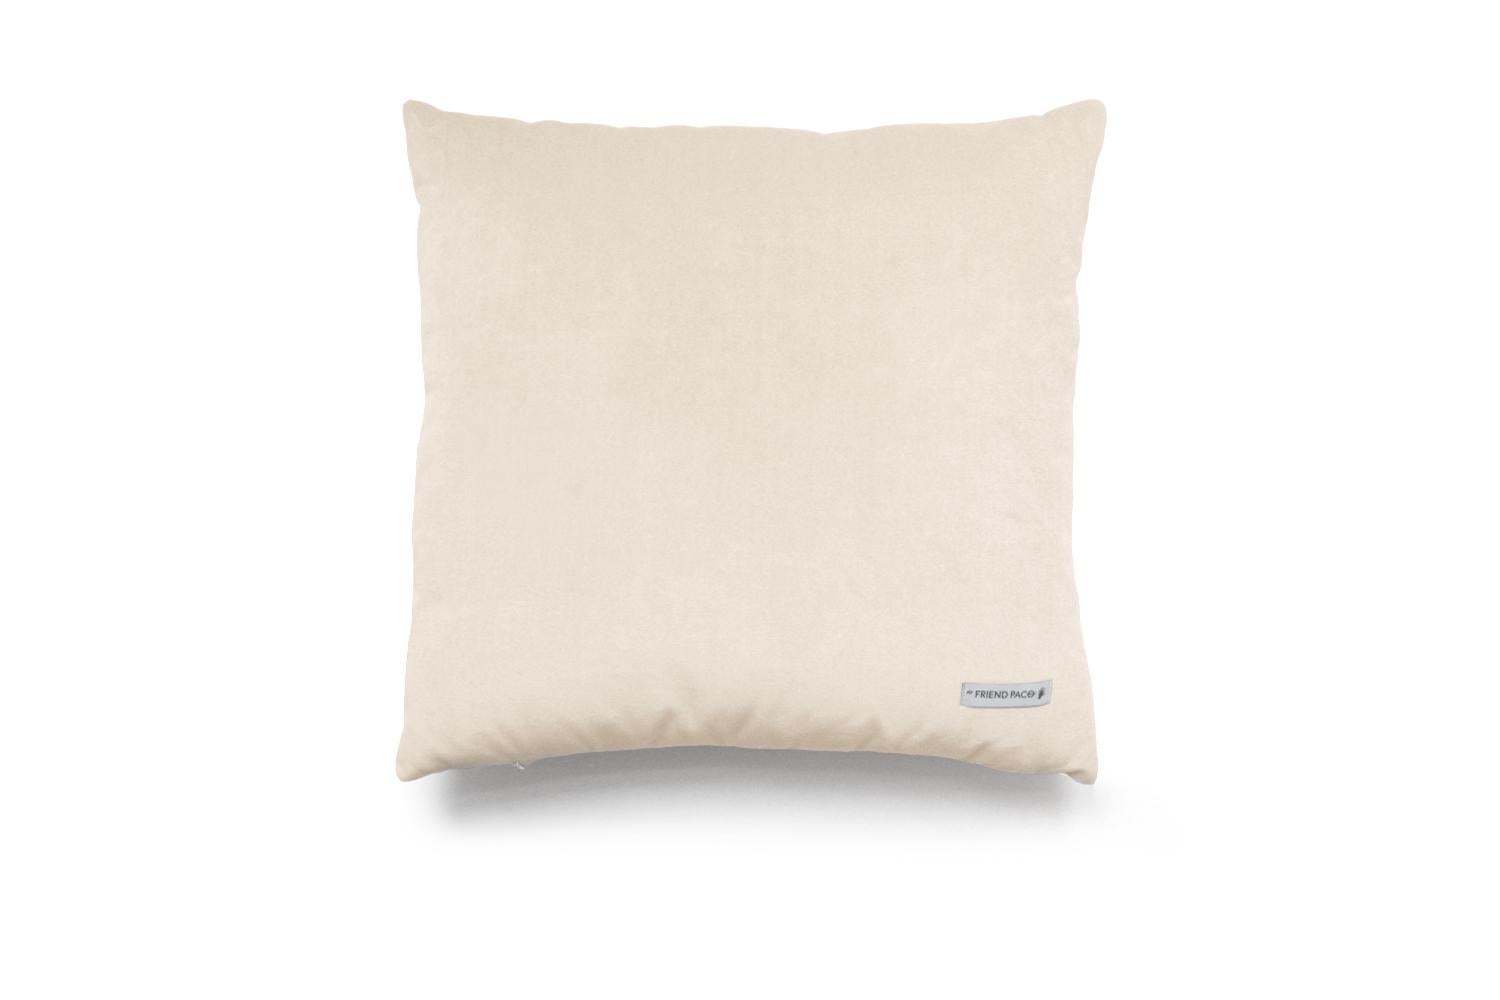 Portuguese Gemma cobalt blue & Brown Set of 2 Velvet Deluxe Handmade Decorative Pillows For Sale